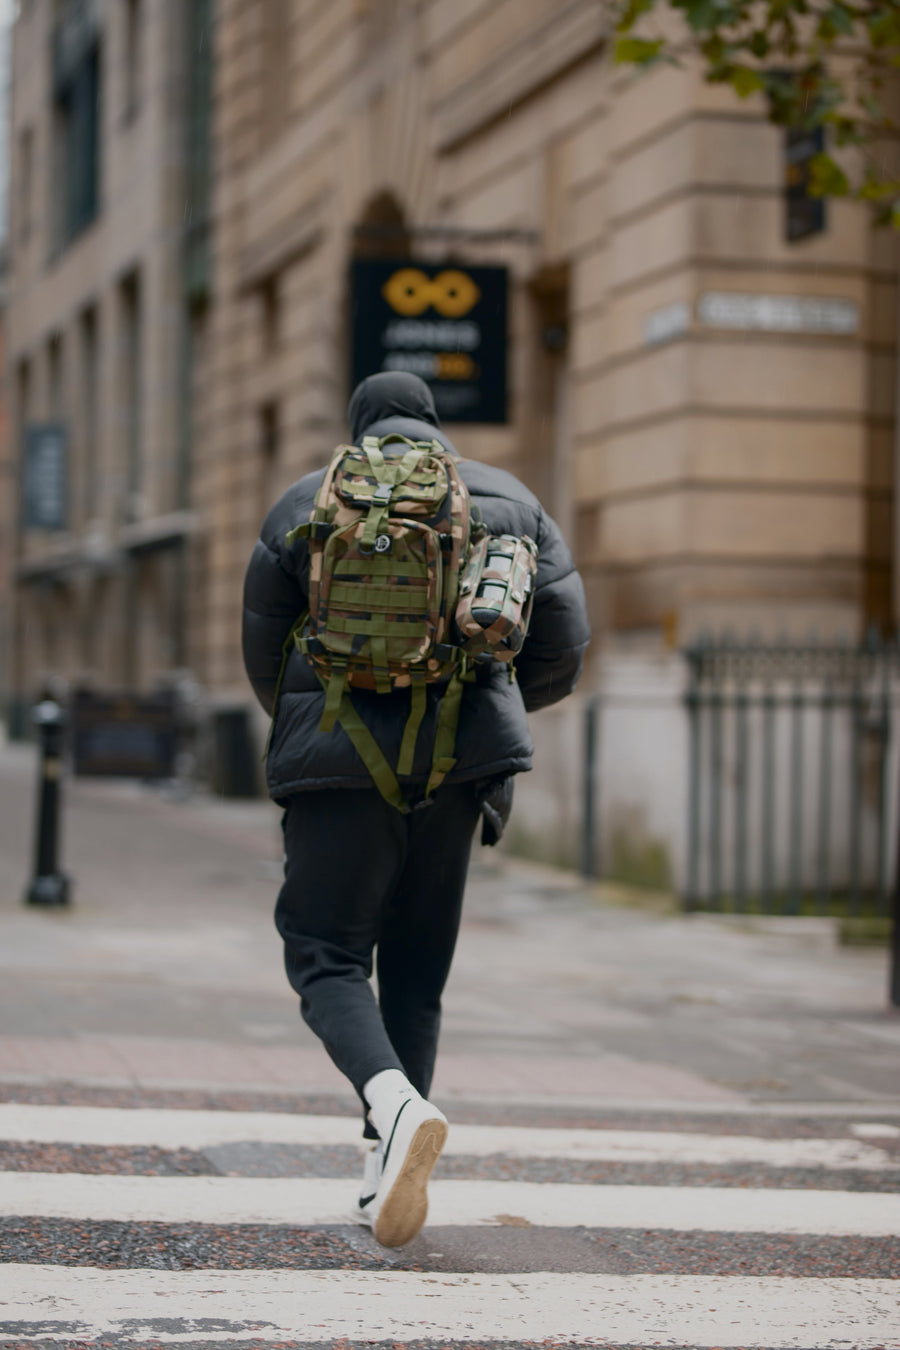 Olokun Green Camo medium-sized Tactical Molle Backpack